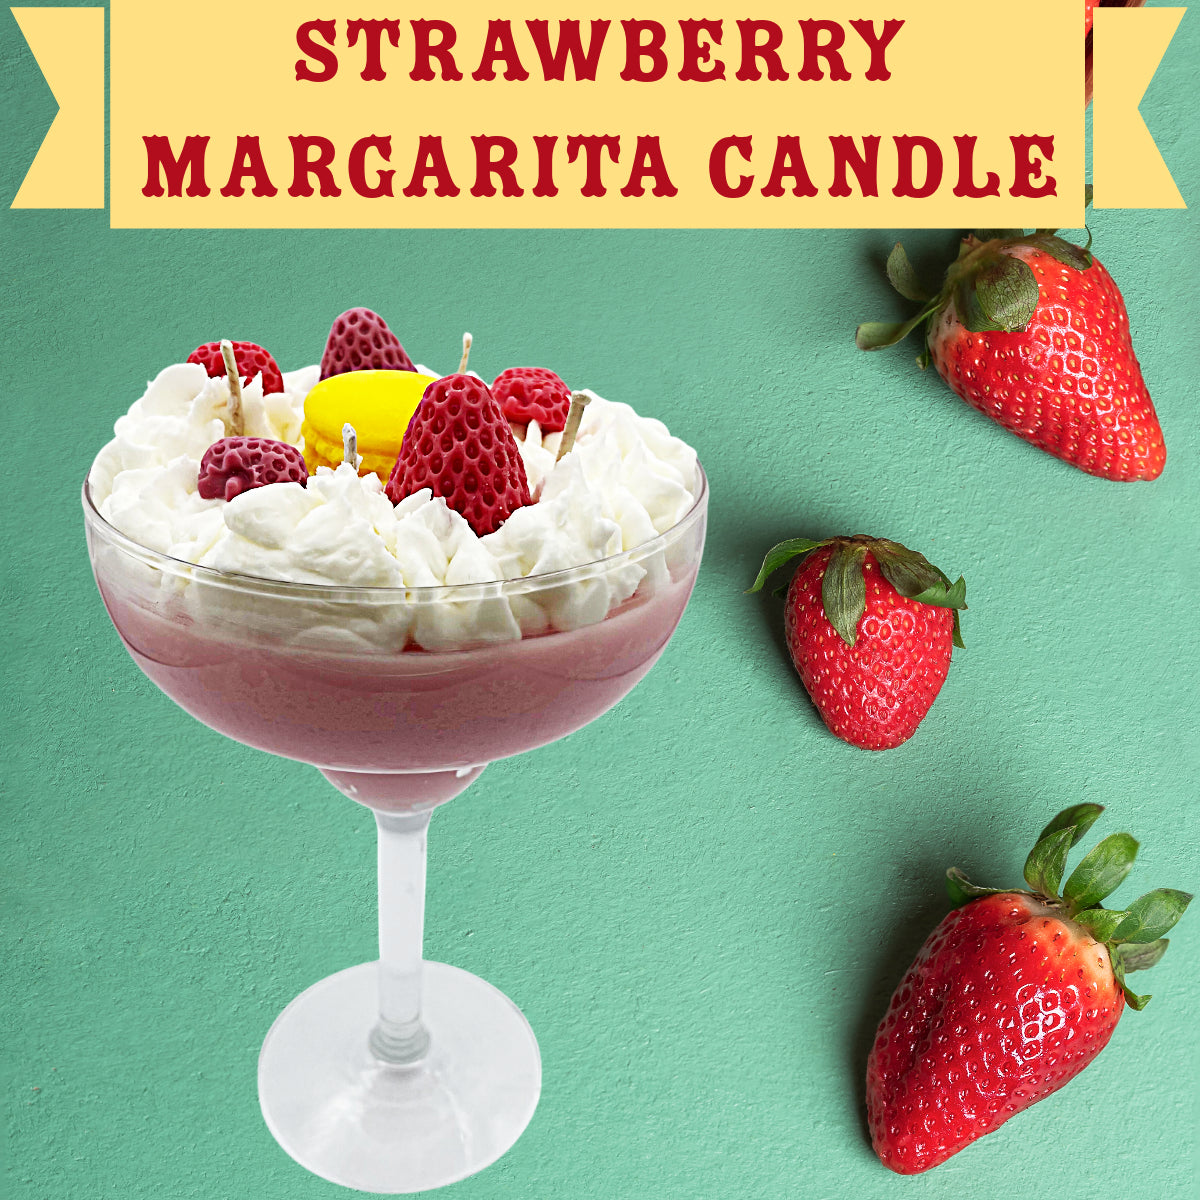 Strawberry Margarita Candle